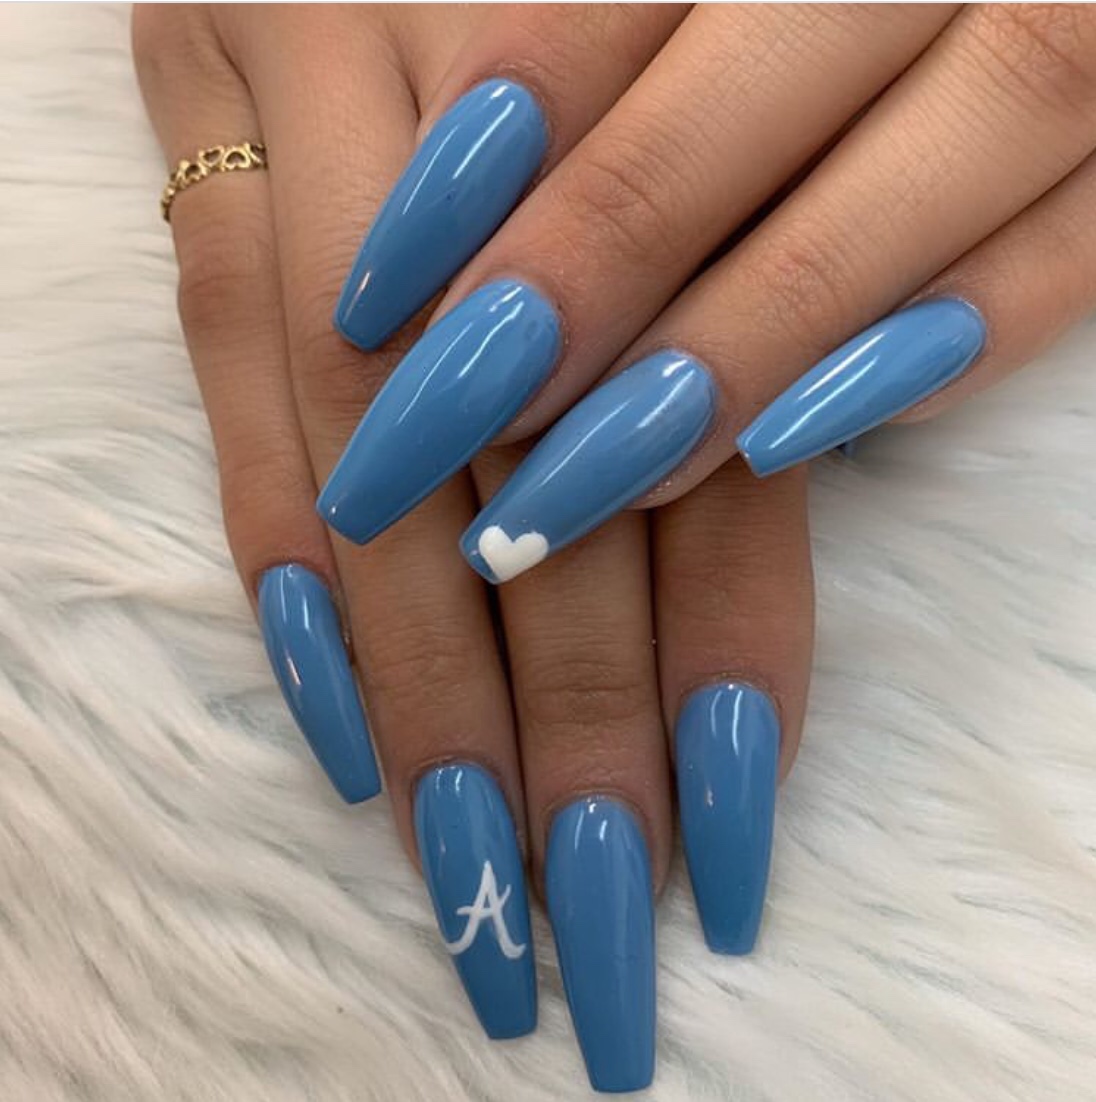 Fabulous blue nail design